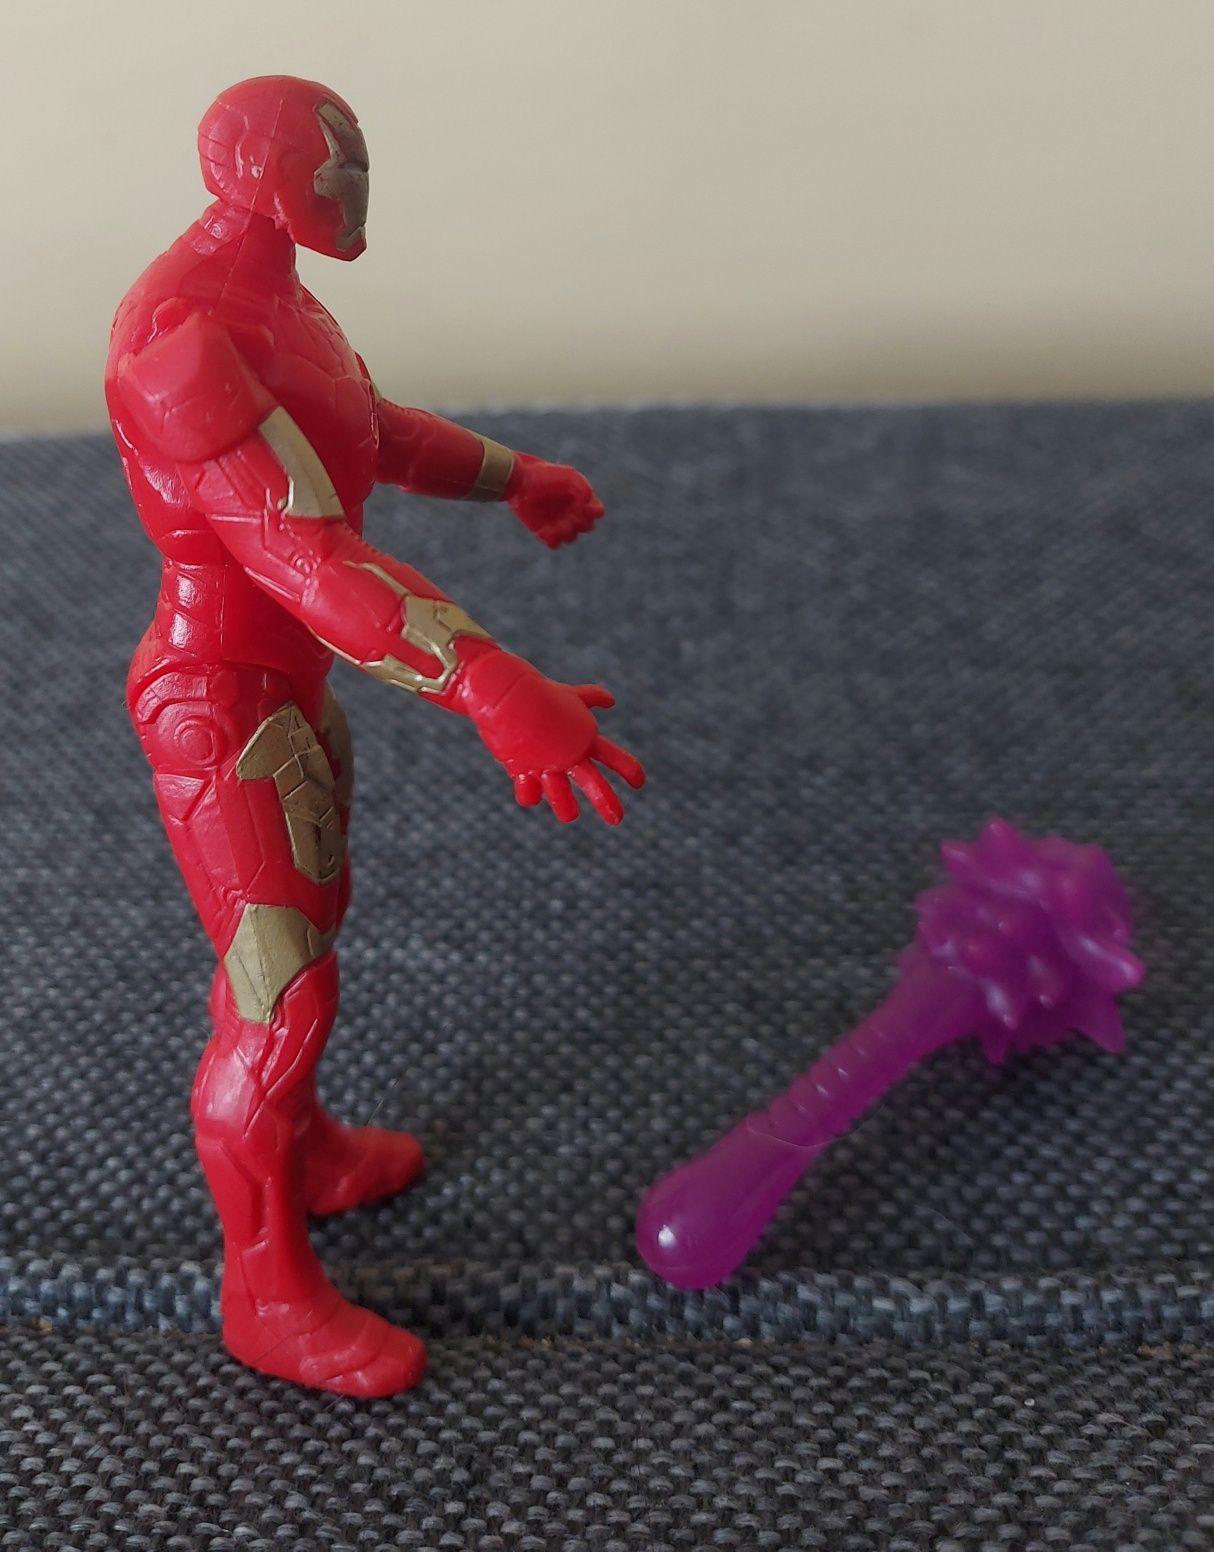 Avengers: Czas Ultrona - Figurka podstawowa - Iron Man